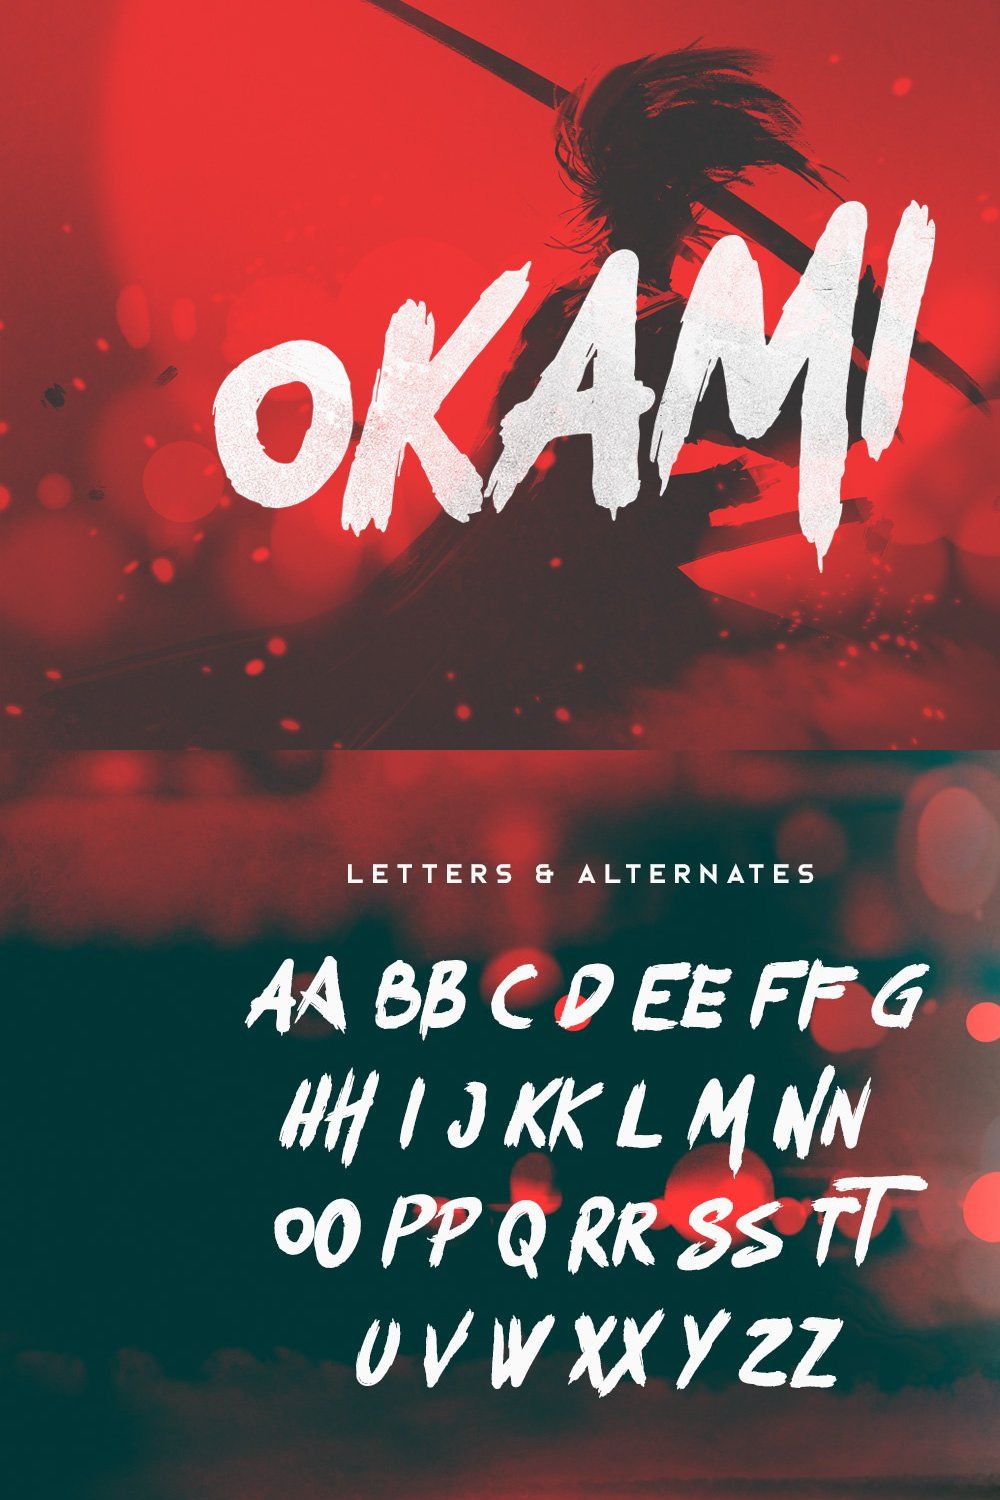 Okami - Brush Font pinterest preview image.